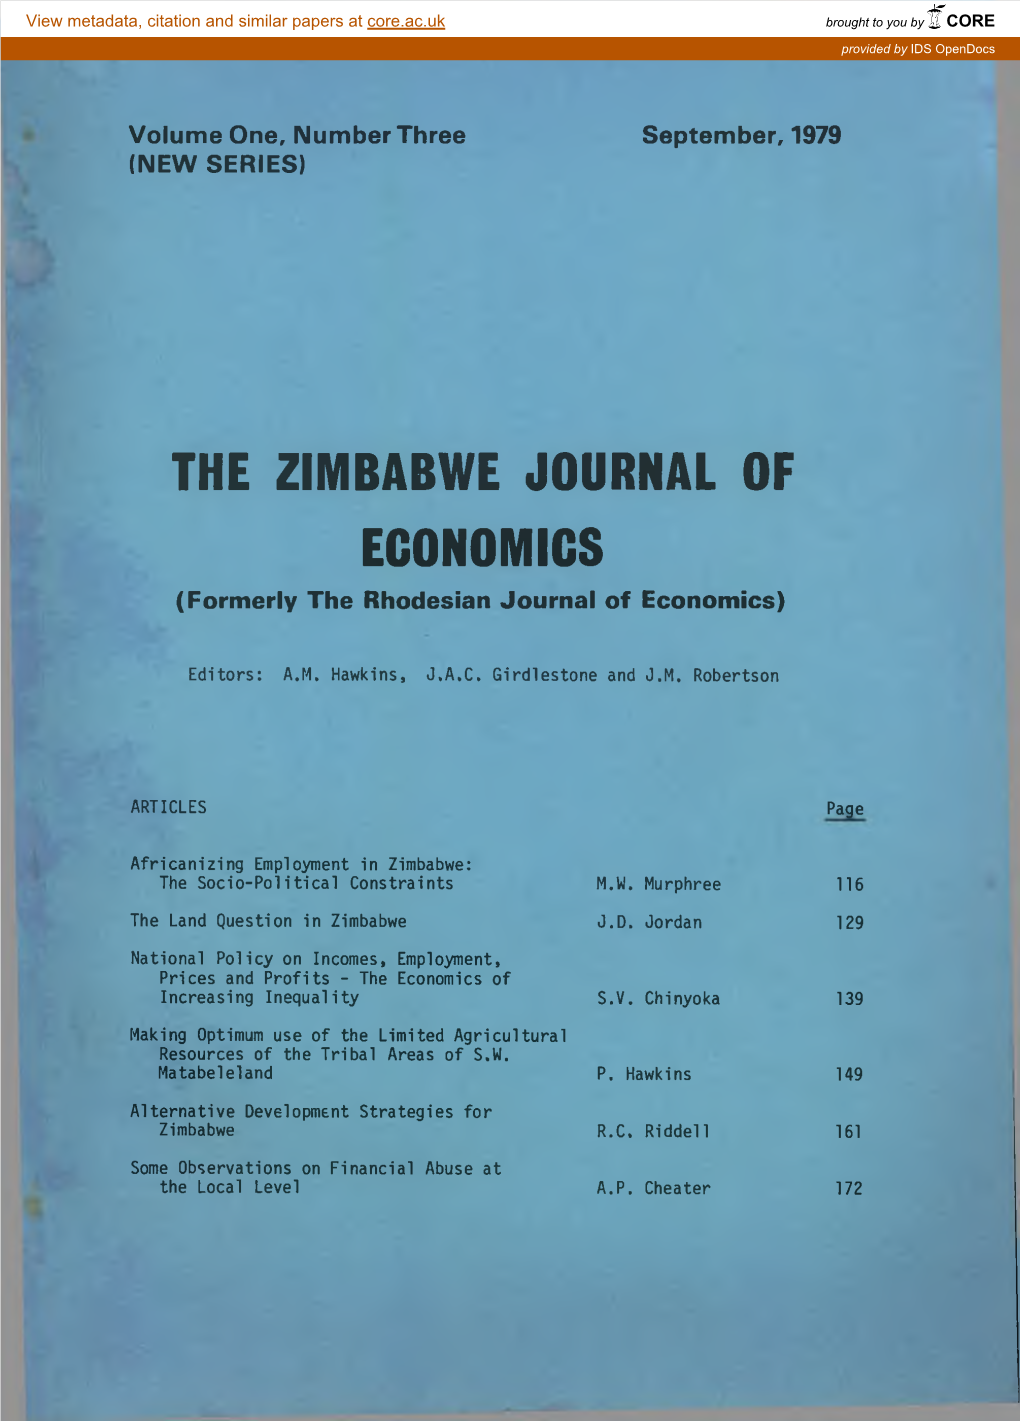 THE ZIMBABWE JOURNAL of ECONOMICS (Formerly the Rhodesian Journal of Economics)